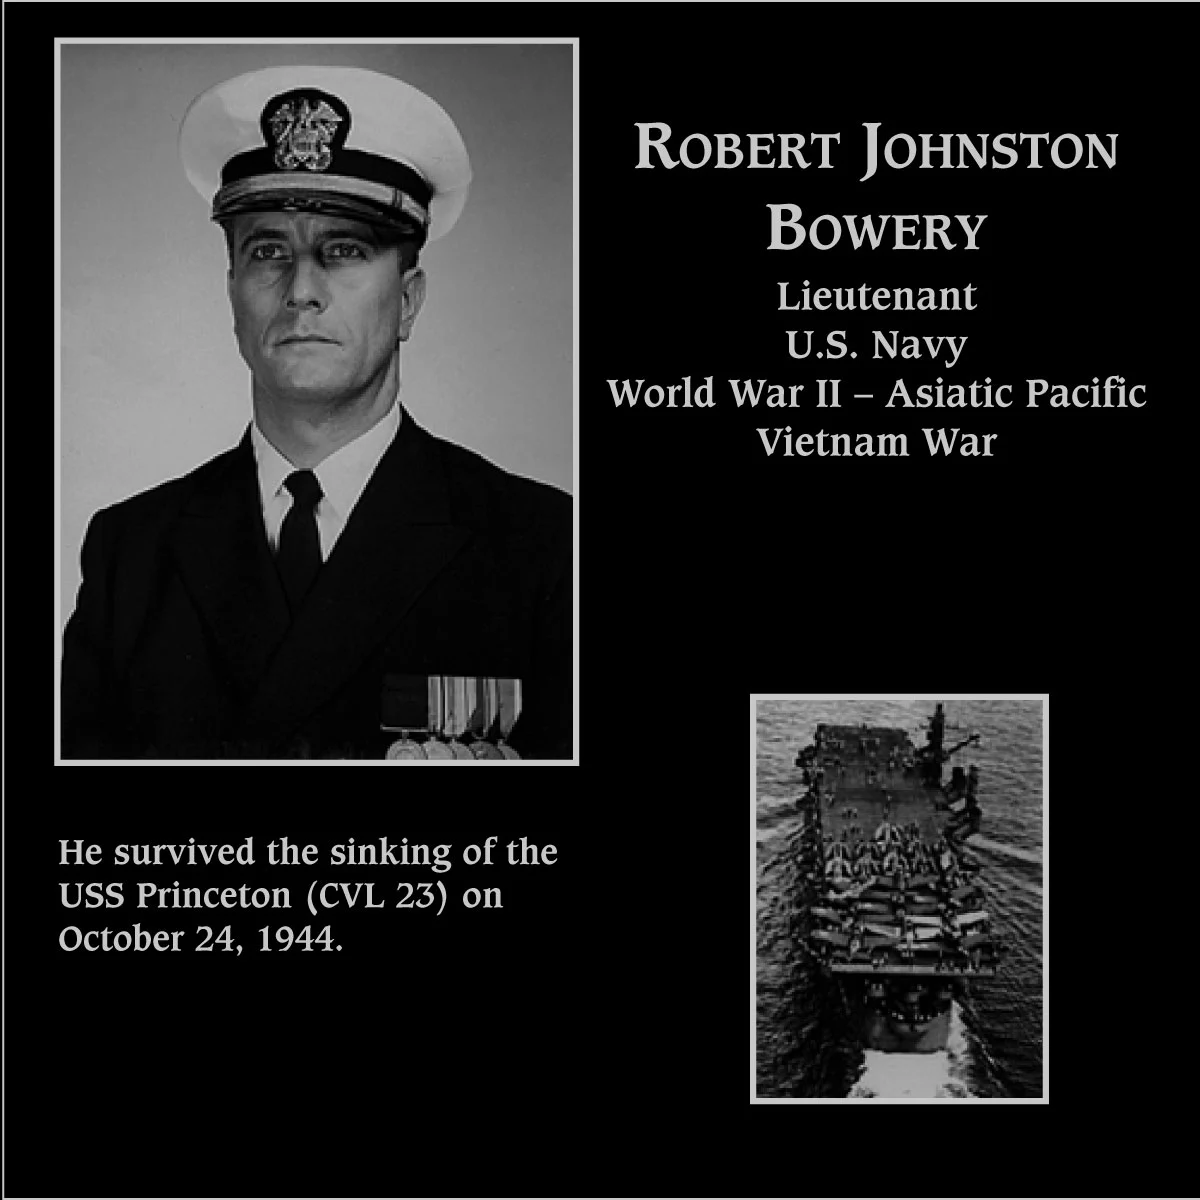 Robert Johnston Bowery